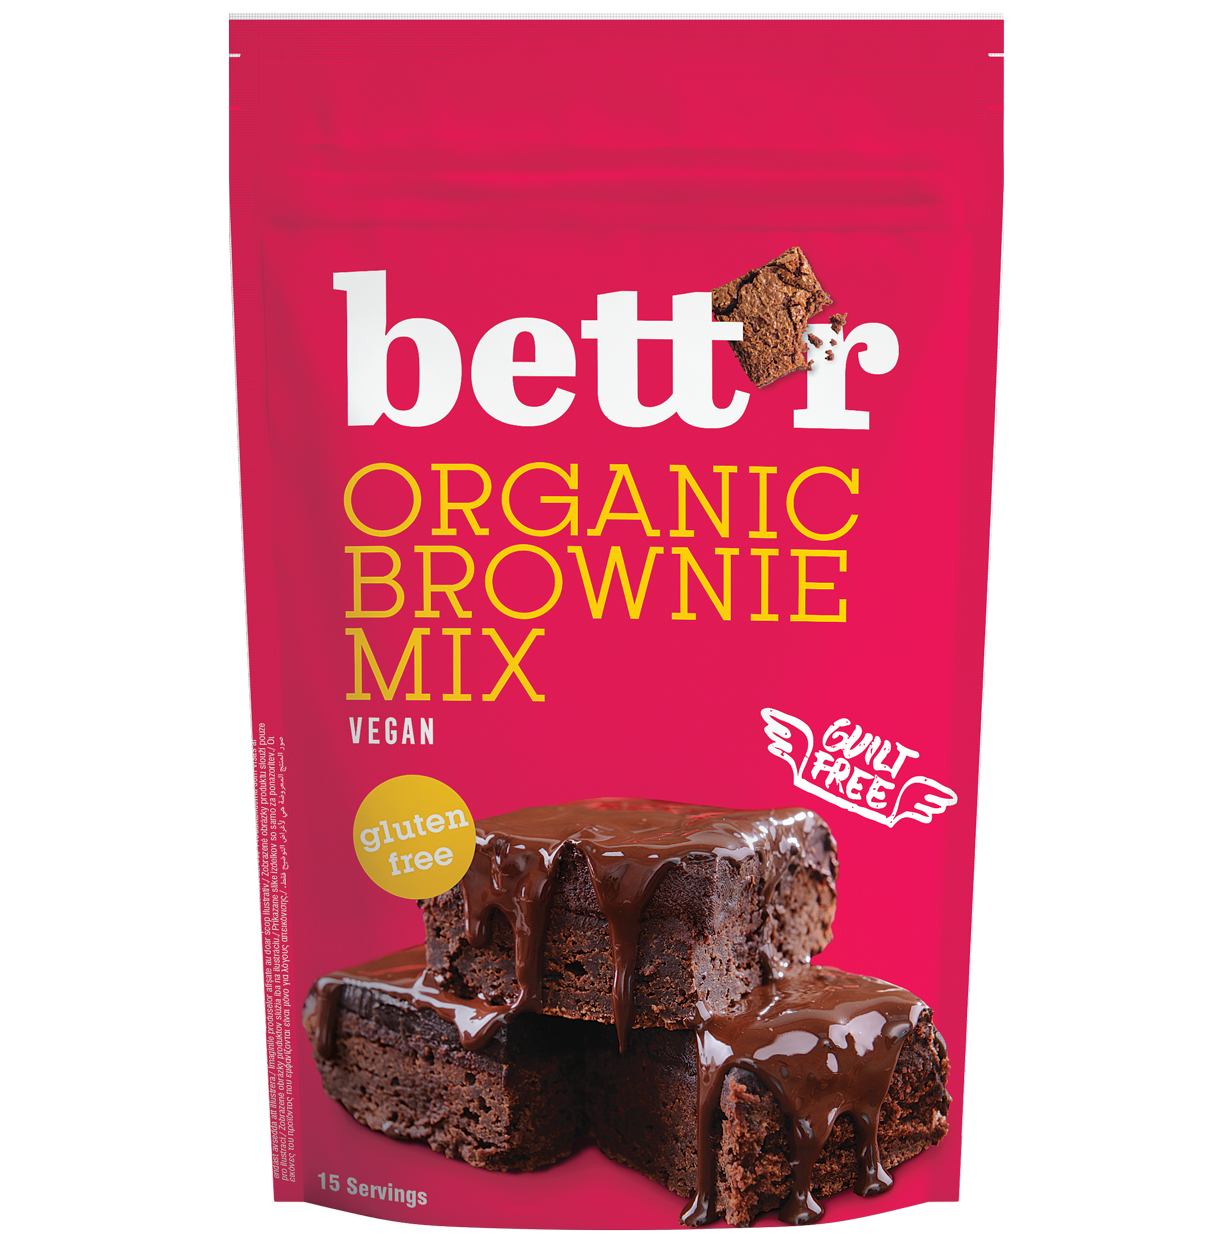 Mix Pentru Prajitura Brownie Fara Gluten, Eco-bio, 400g - Bettr